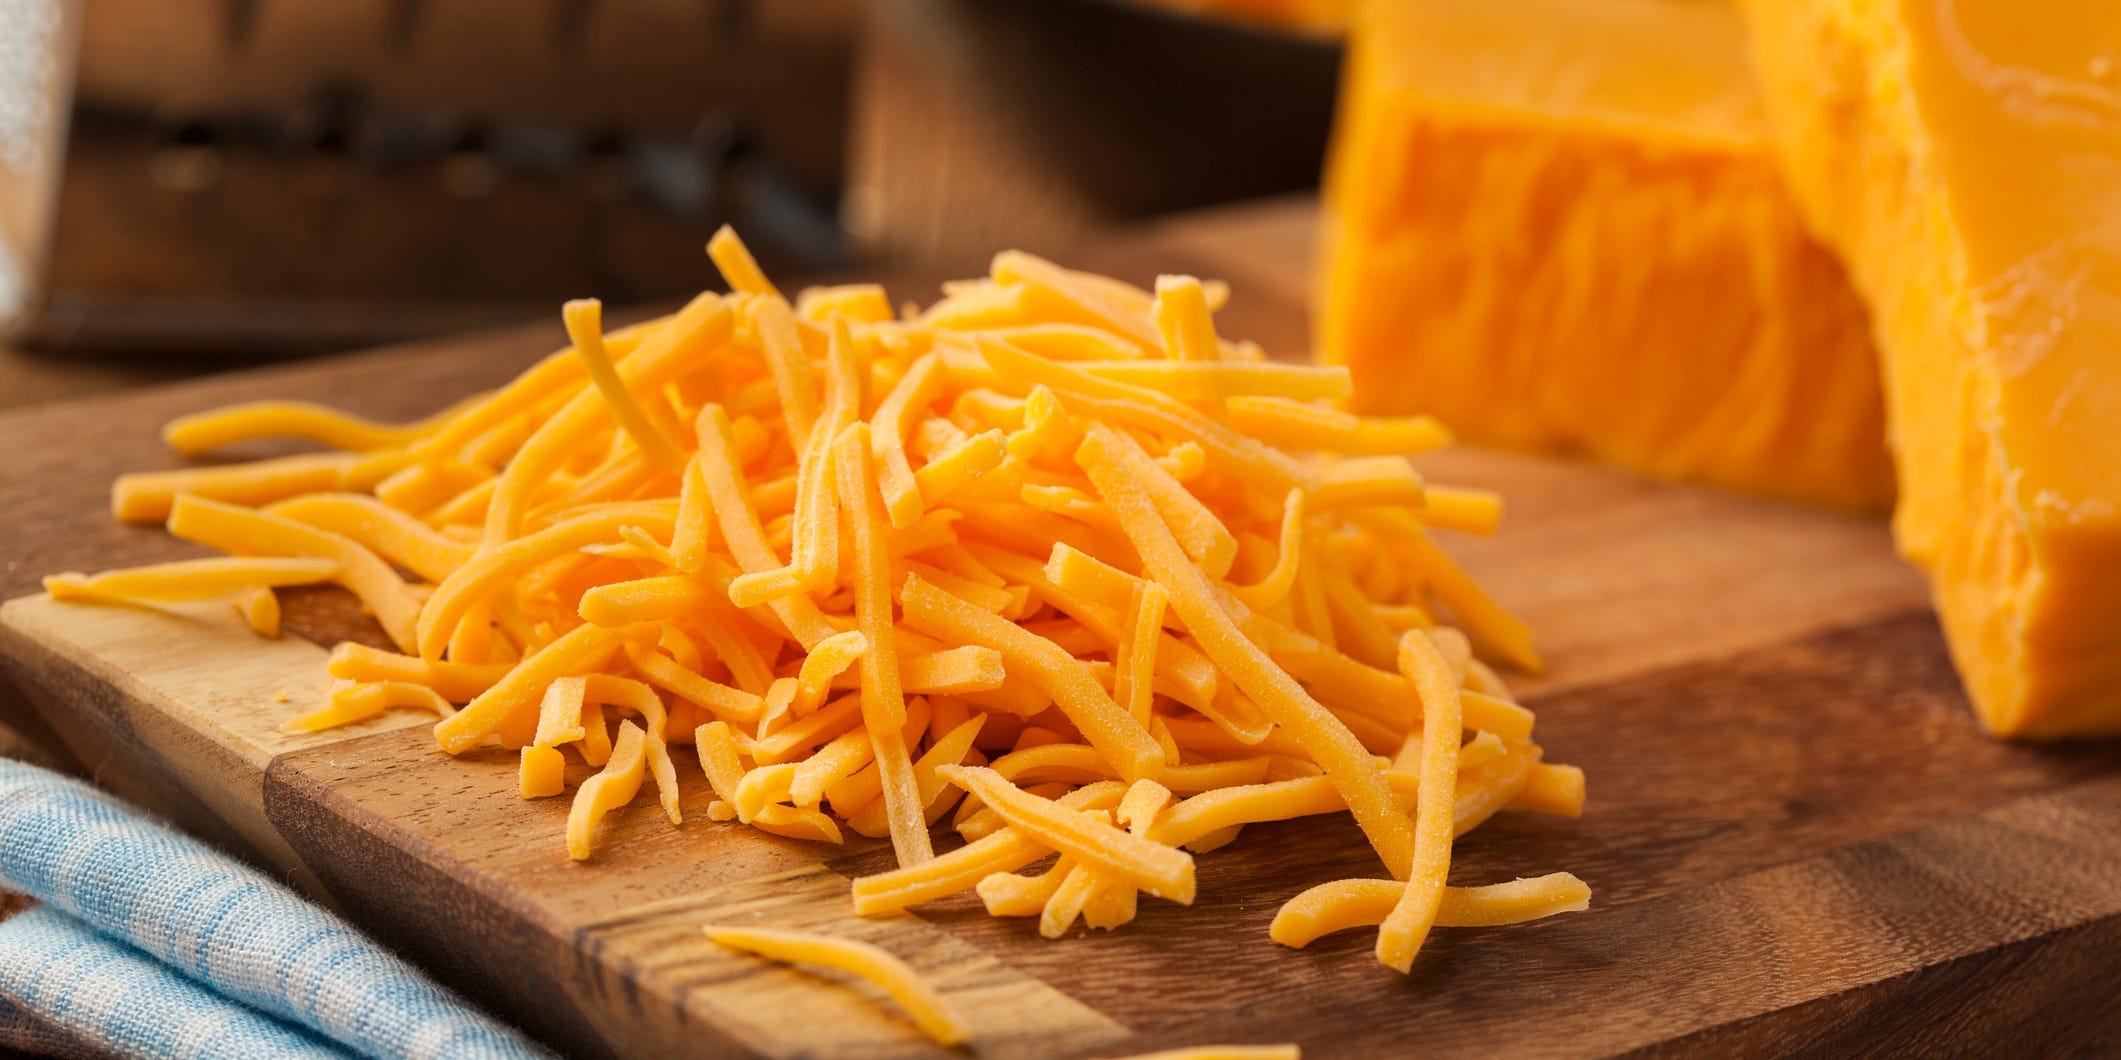 A pile of shredded cheddar cheese on a cutting board